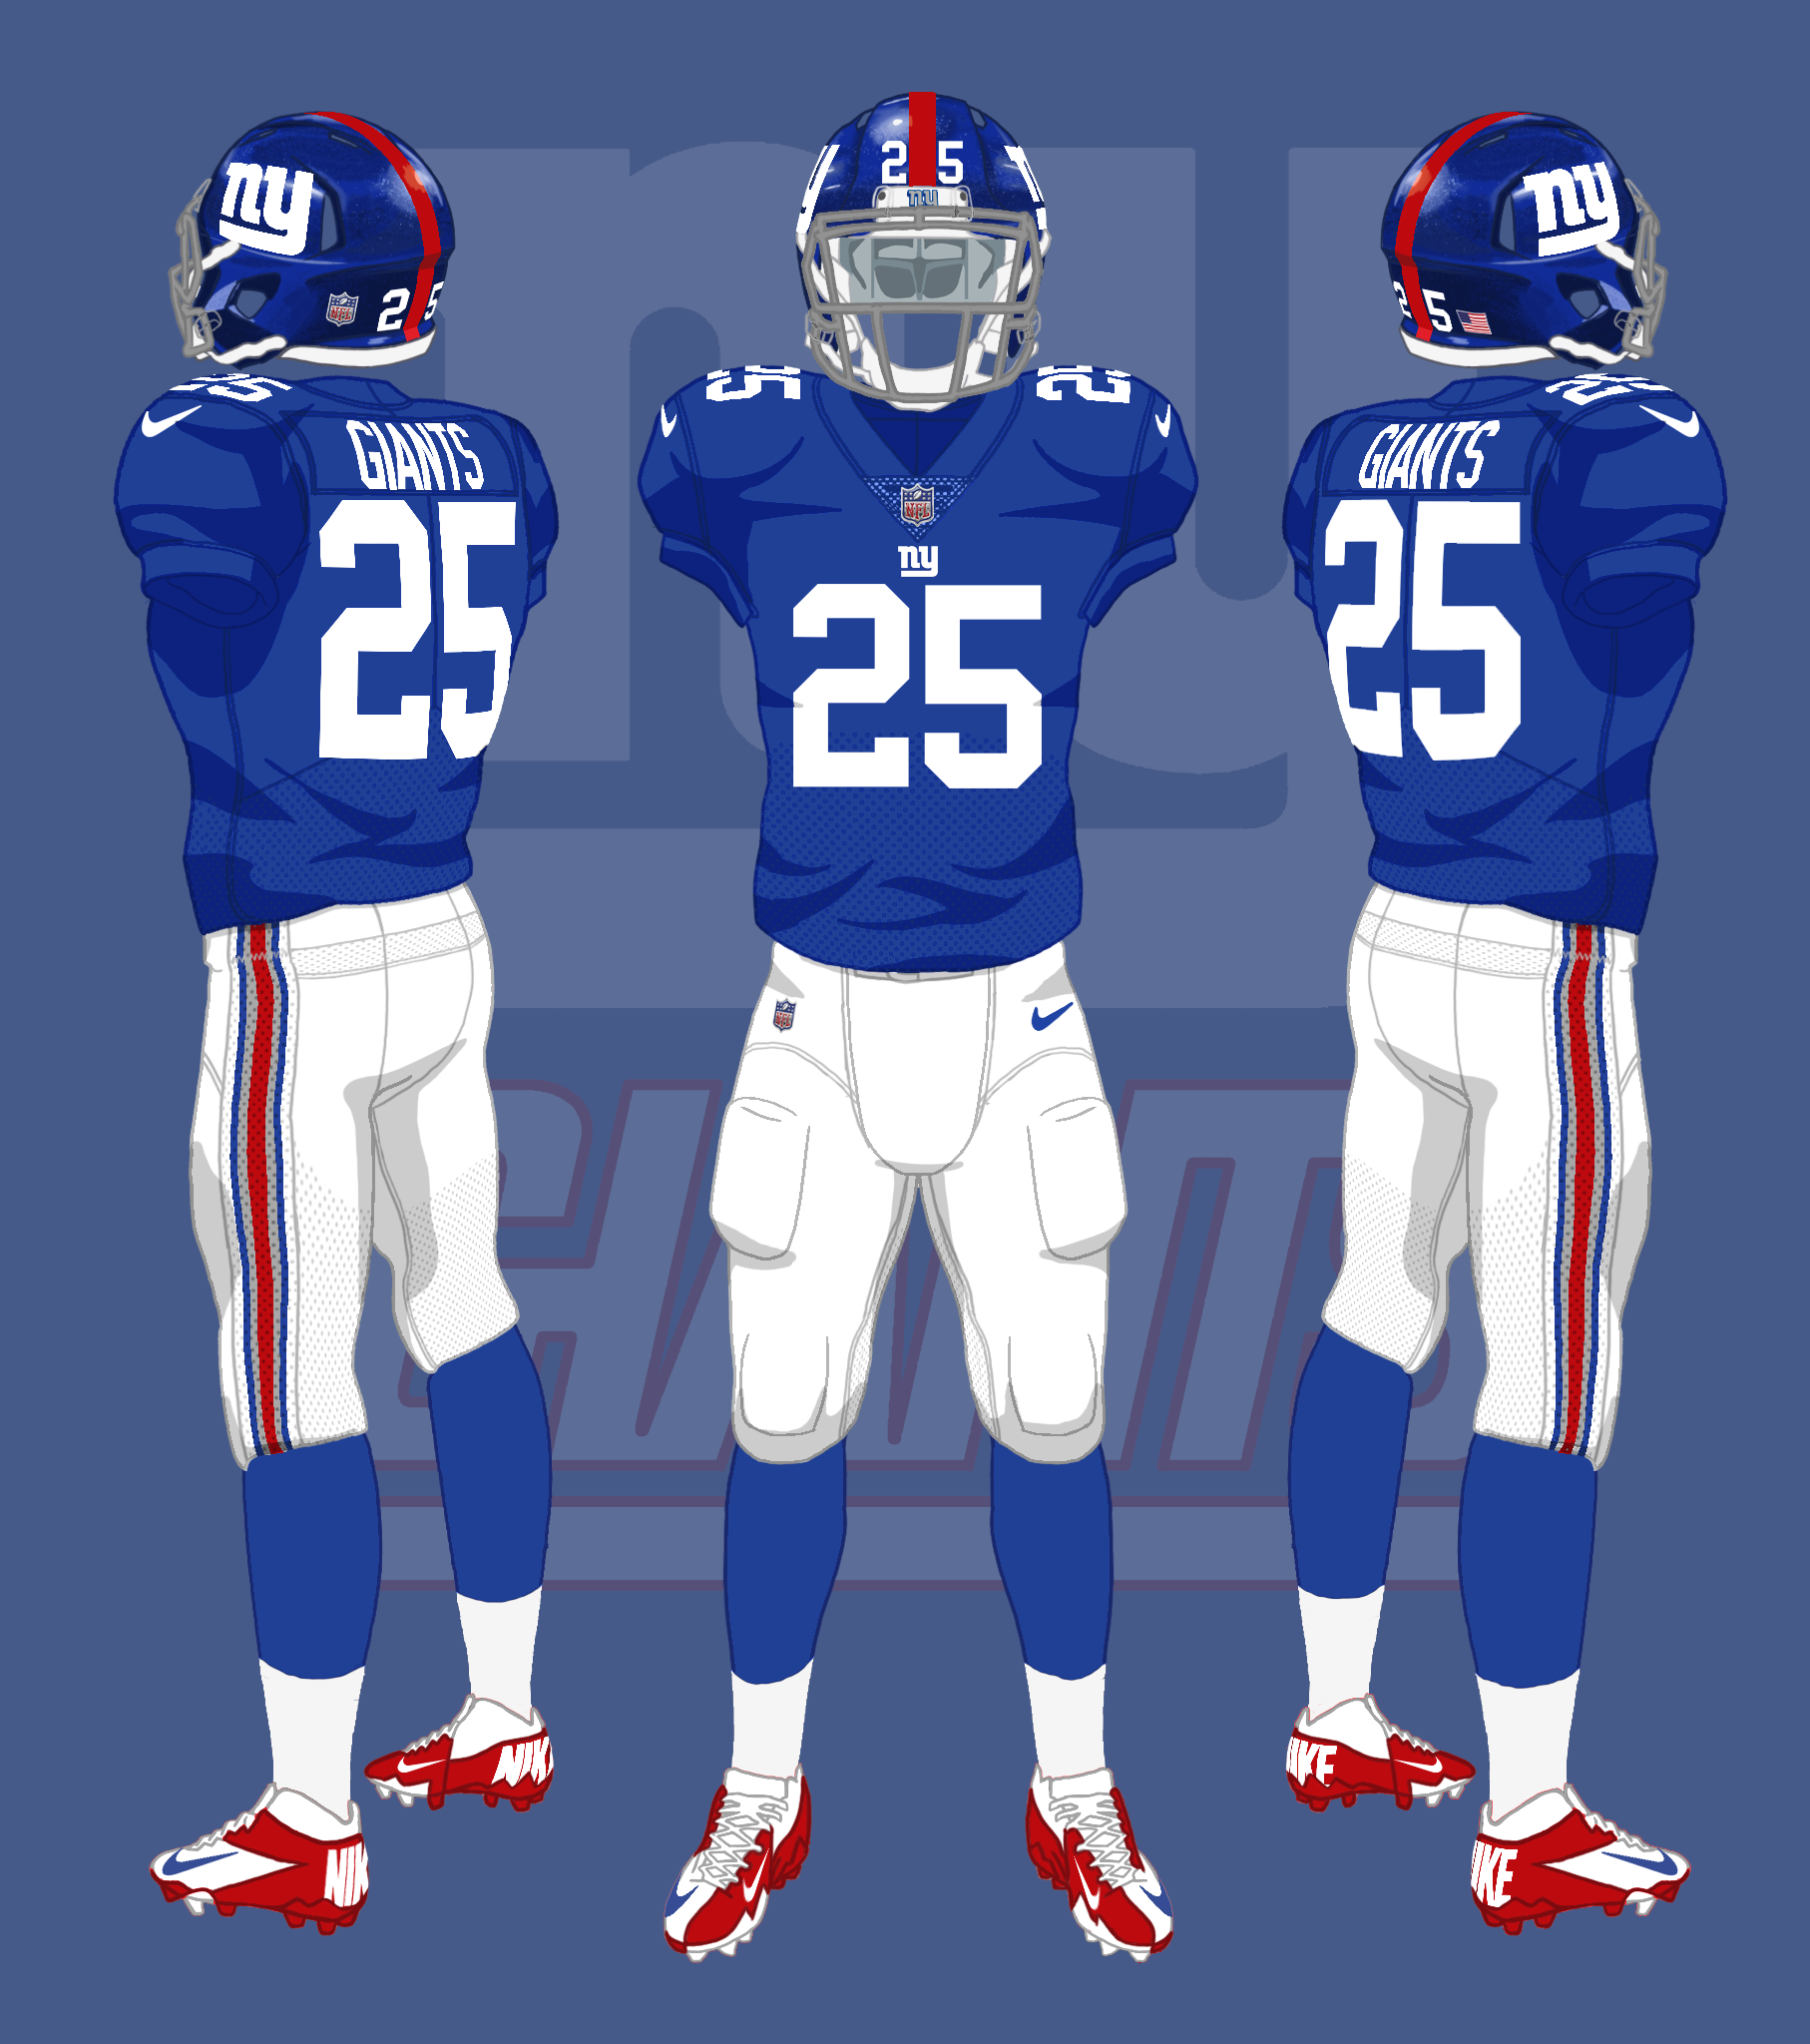 new giants uniforms 2020